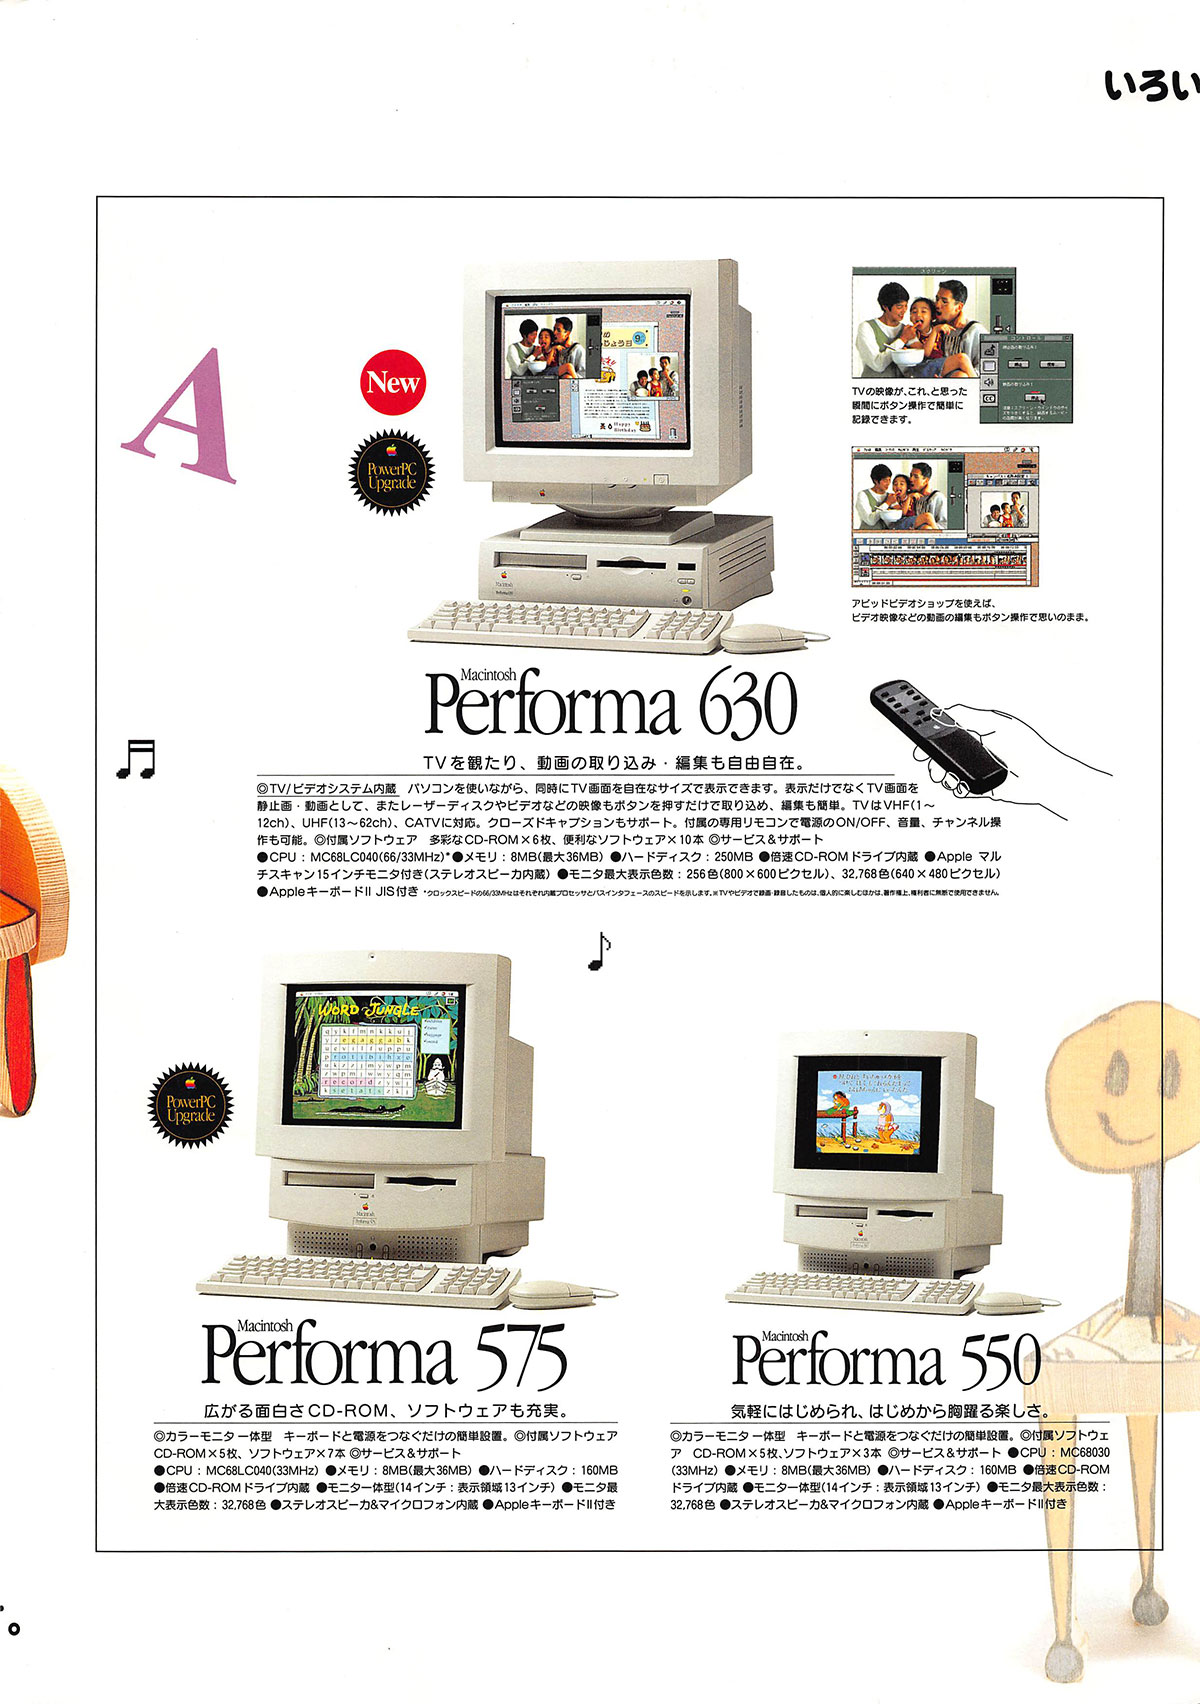 Macintosh Performa 630/575/550